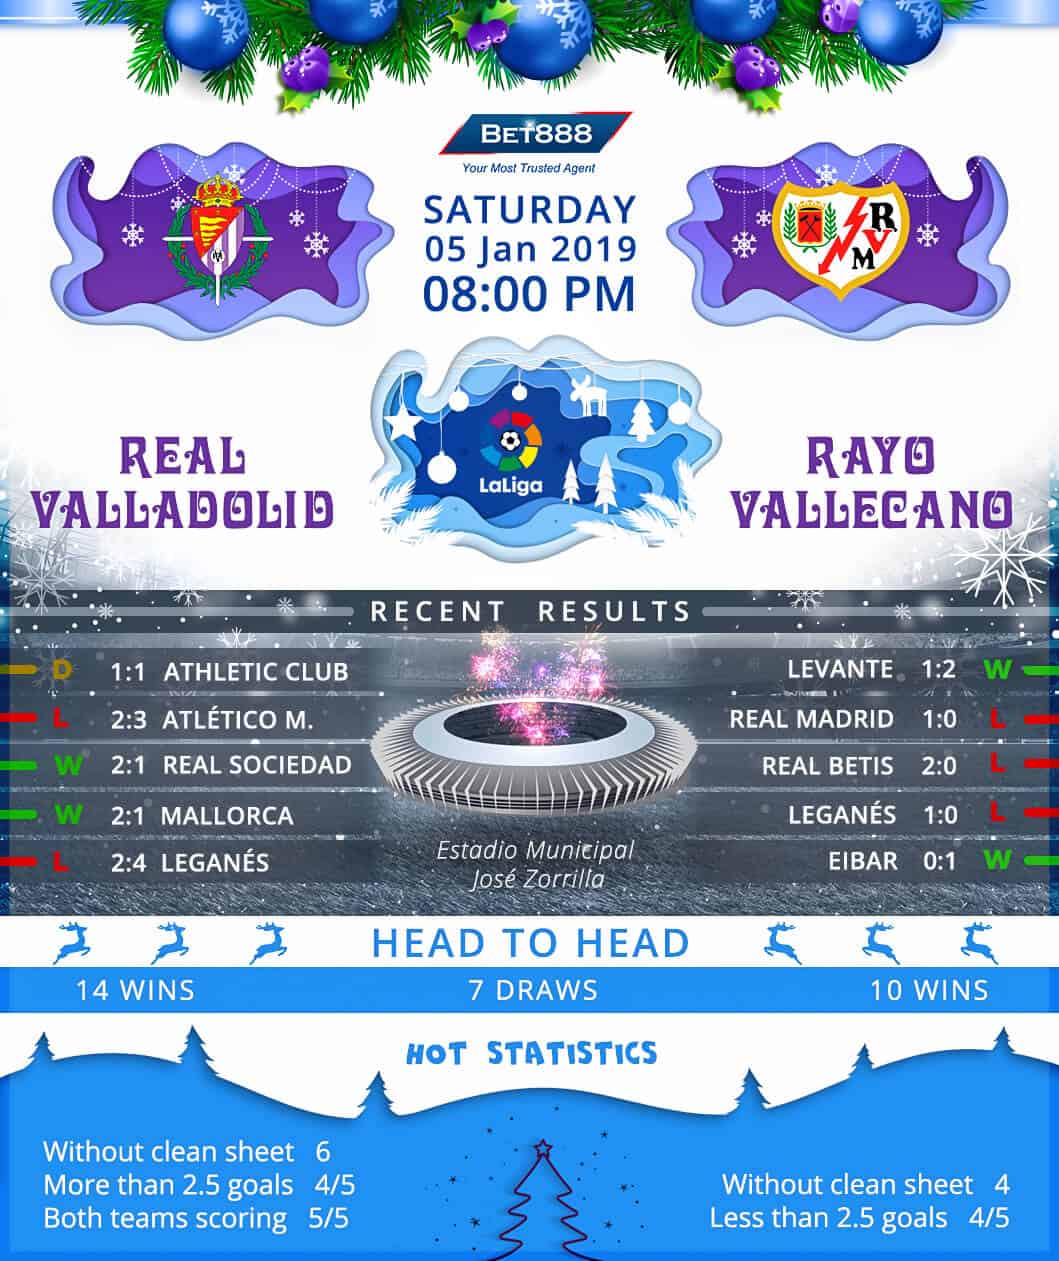 Real Valladolid vs Rayo Vallecano 05/01/19